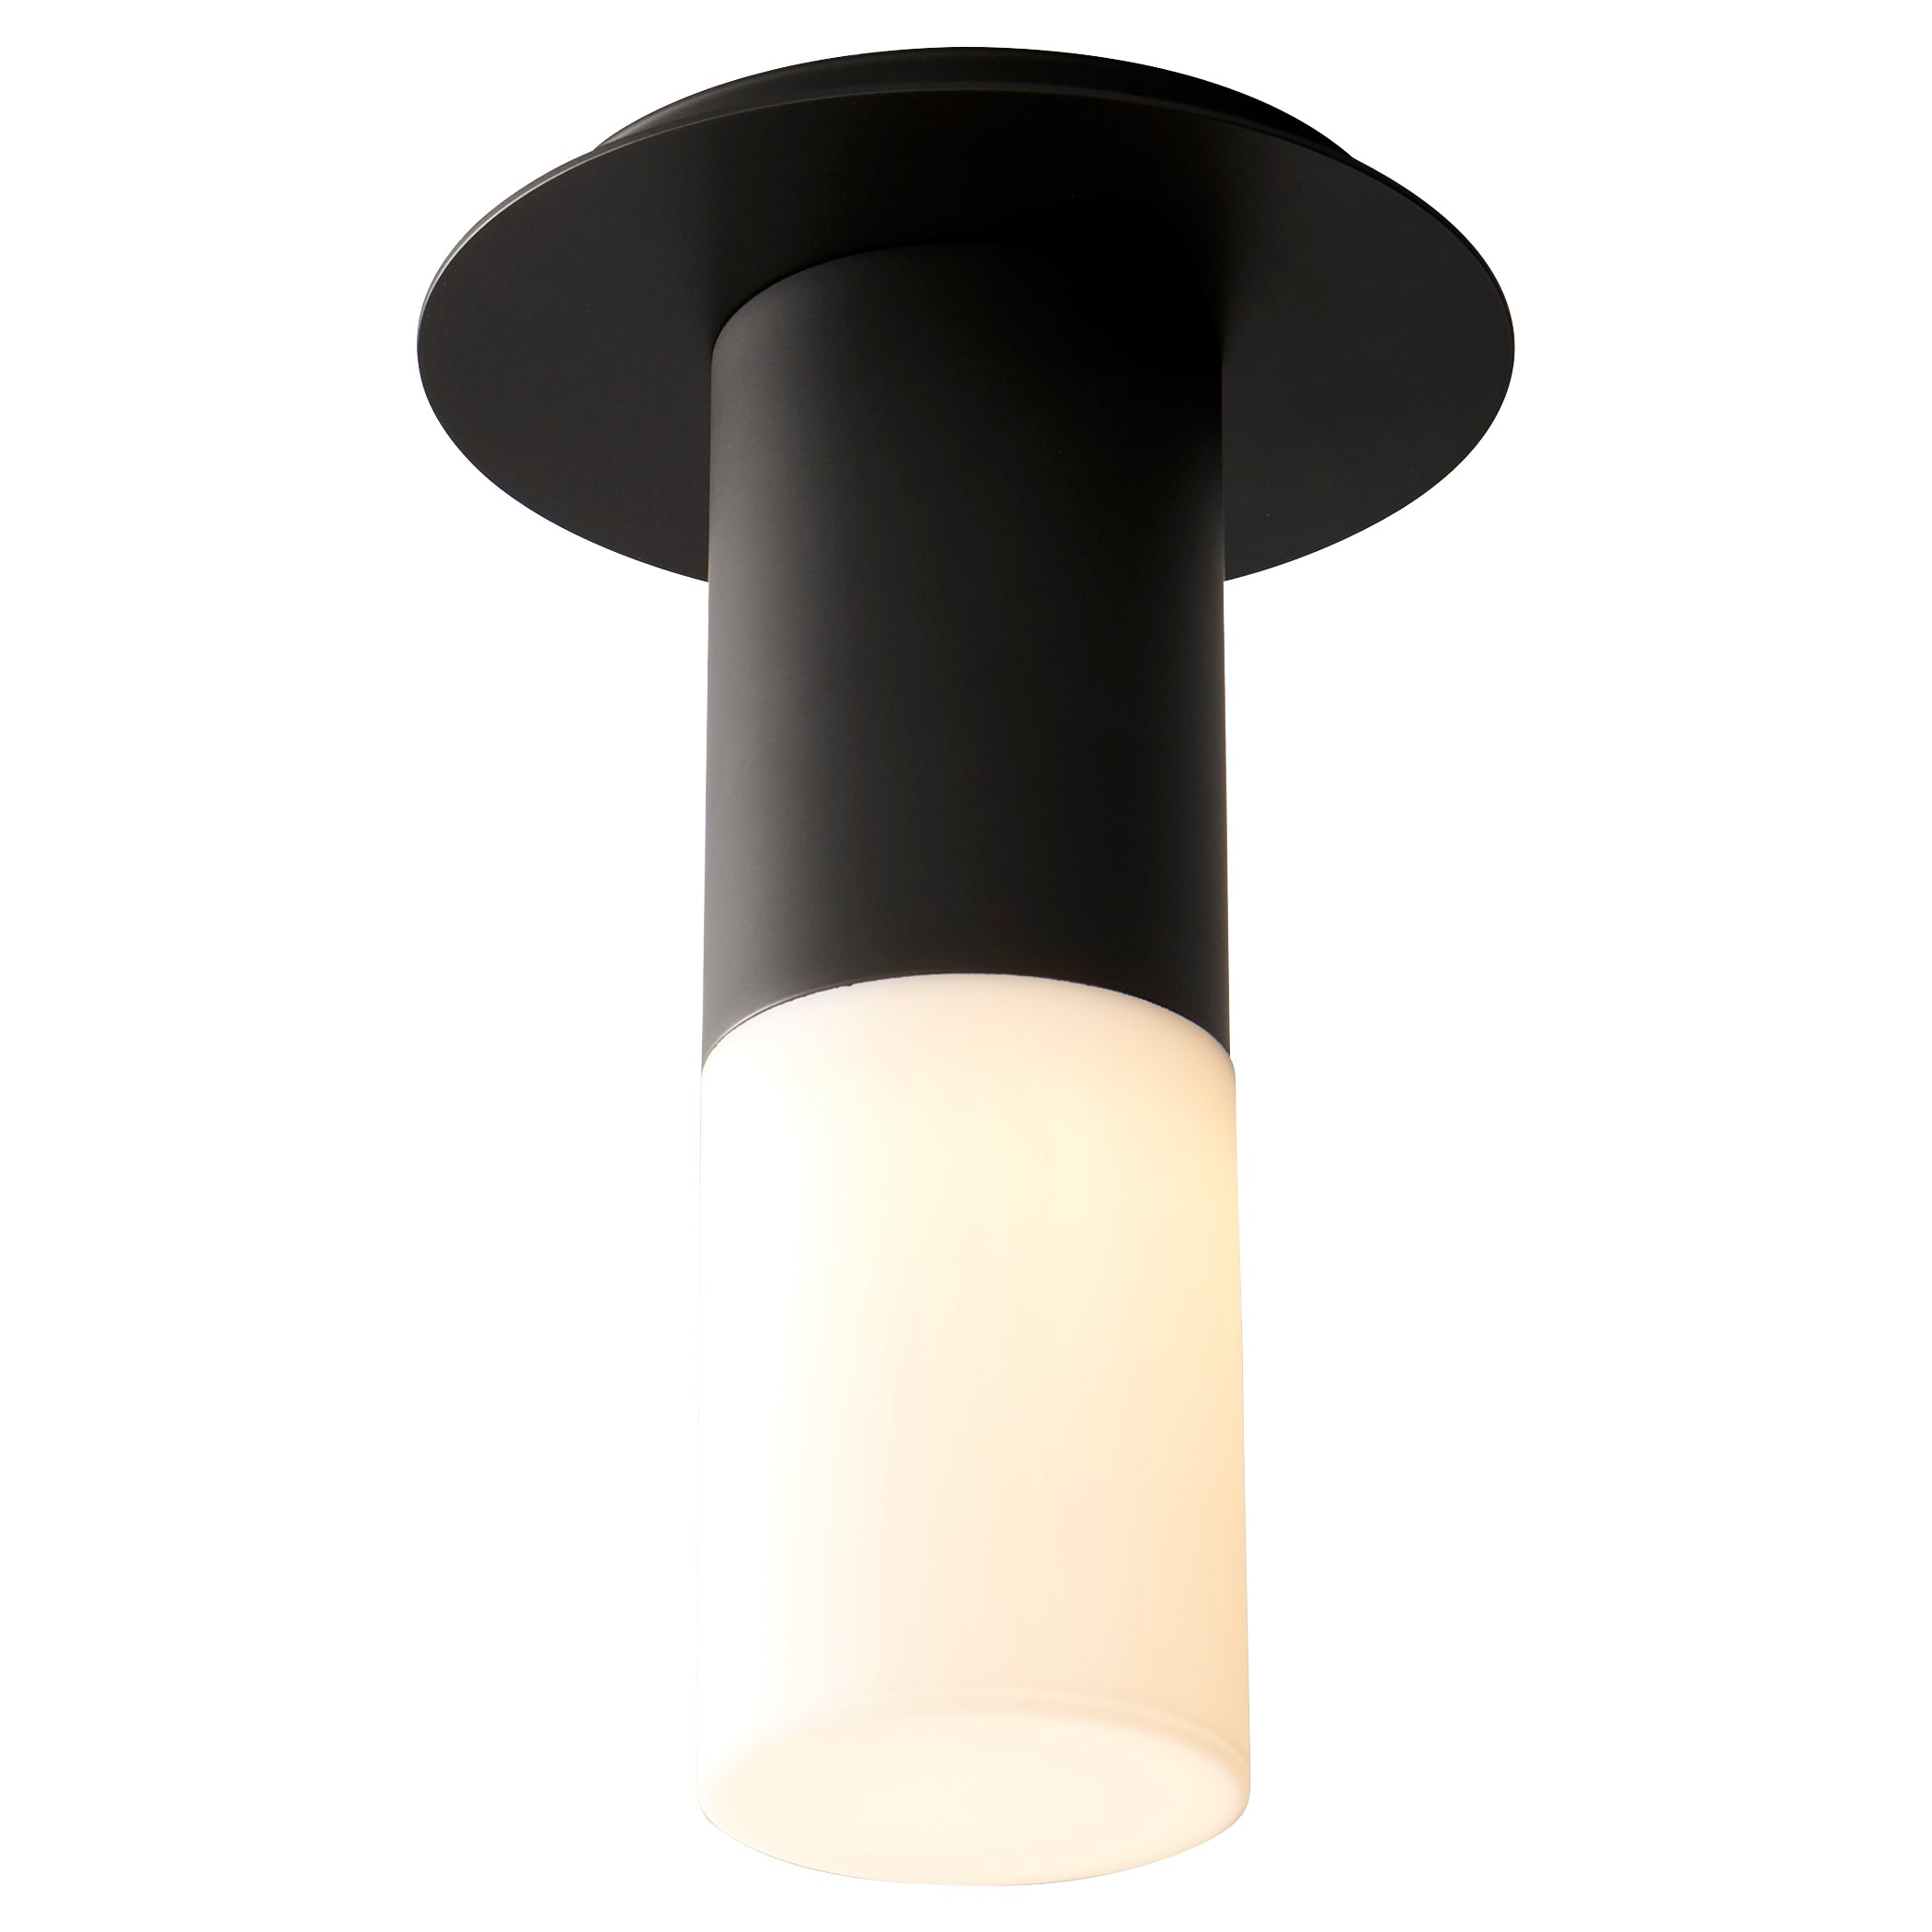 Oxygen Pilar 3-308-115 LED Flush Mount Ceiling Light Fixture - Black